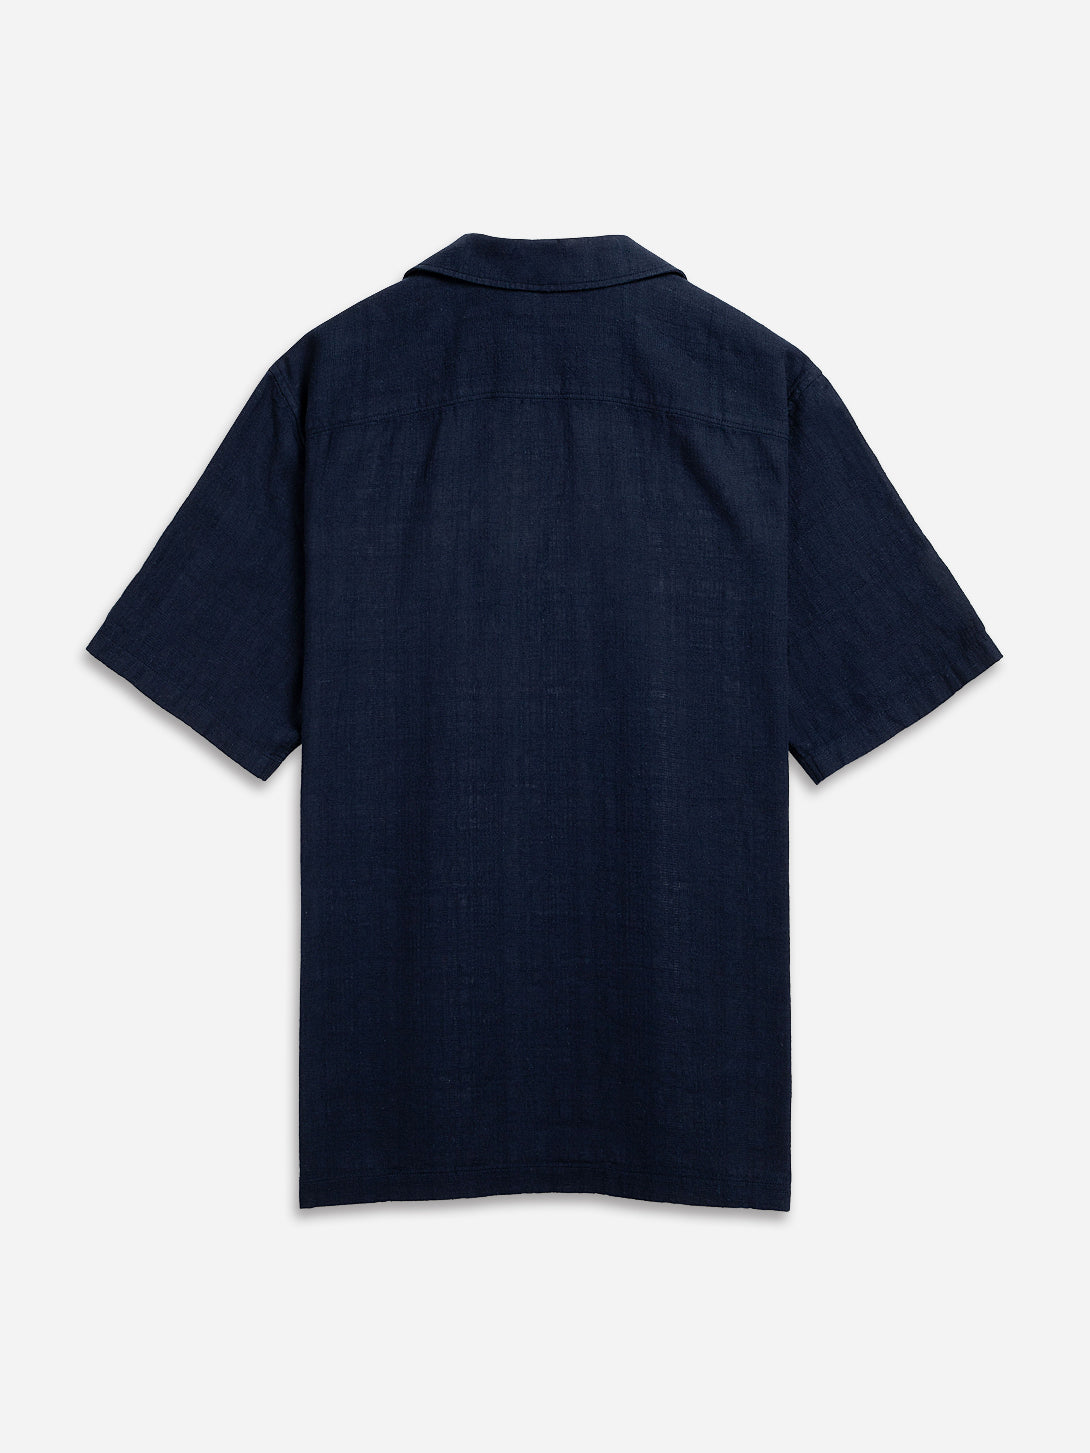 Navy Rockaway Cotton Linen Shirt Mens Camp Collar Pocket Shirt